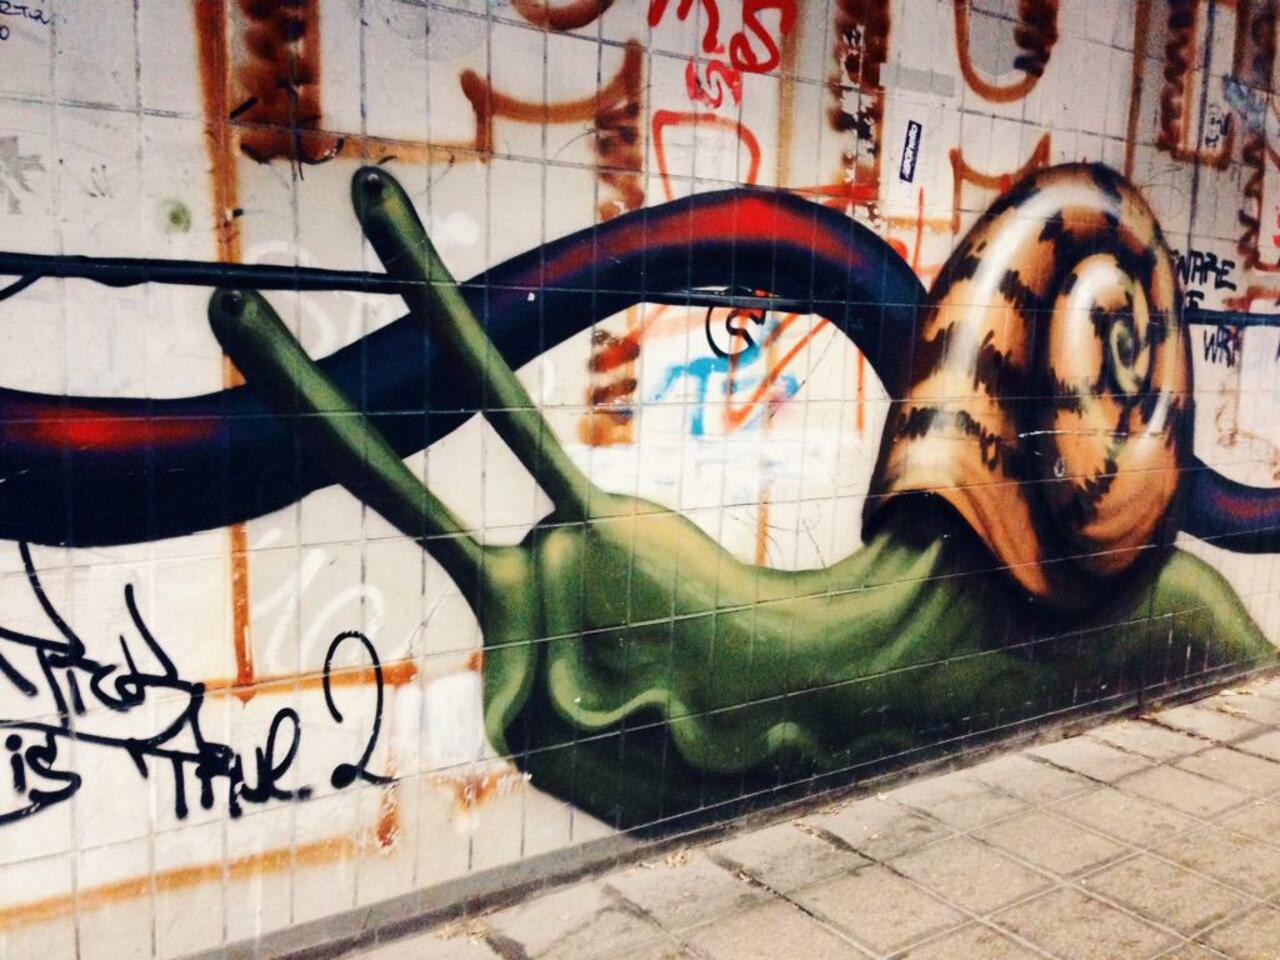 The two best pieces of wall art I've seen in Nuremberg so far. #StreetArt #Murals #Graffiti http://t.co/NVPR5xD76u